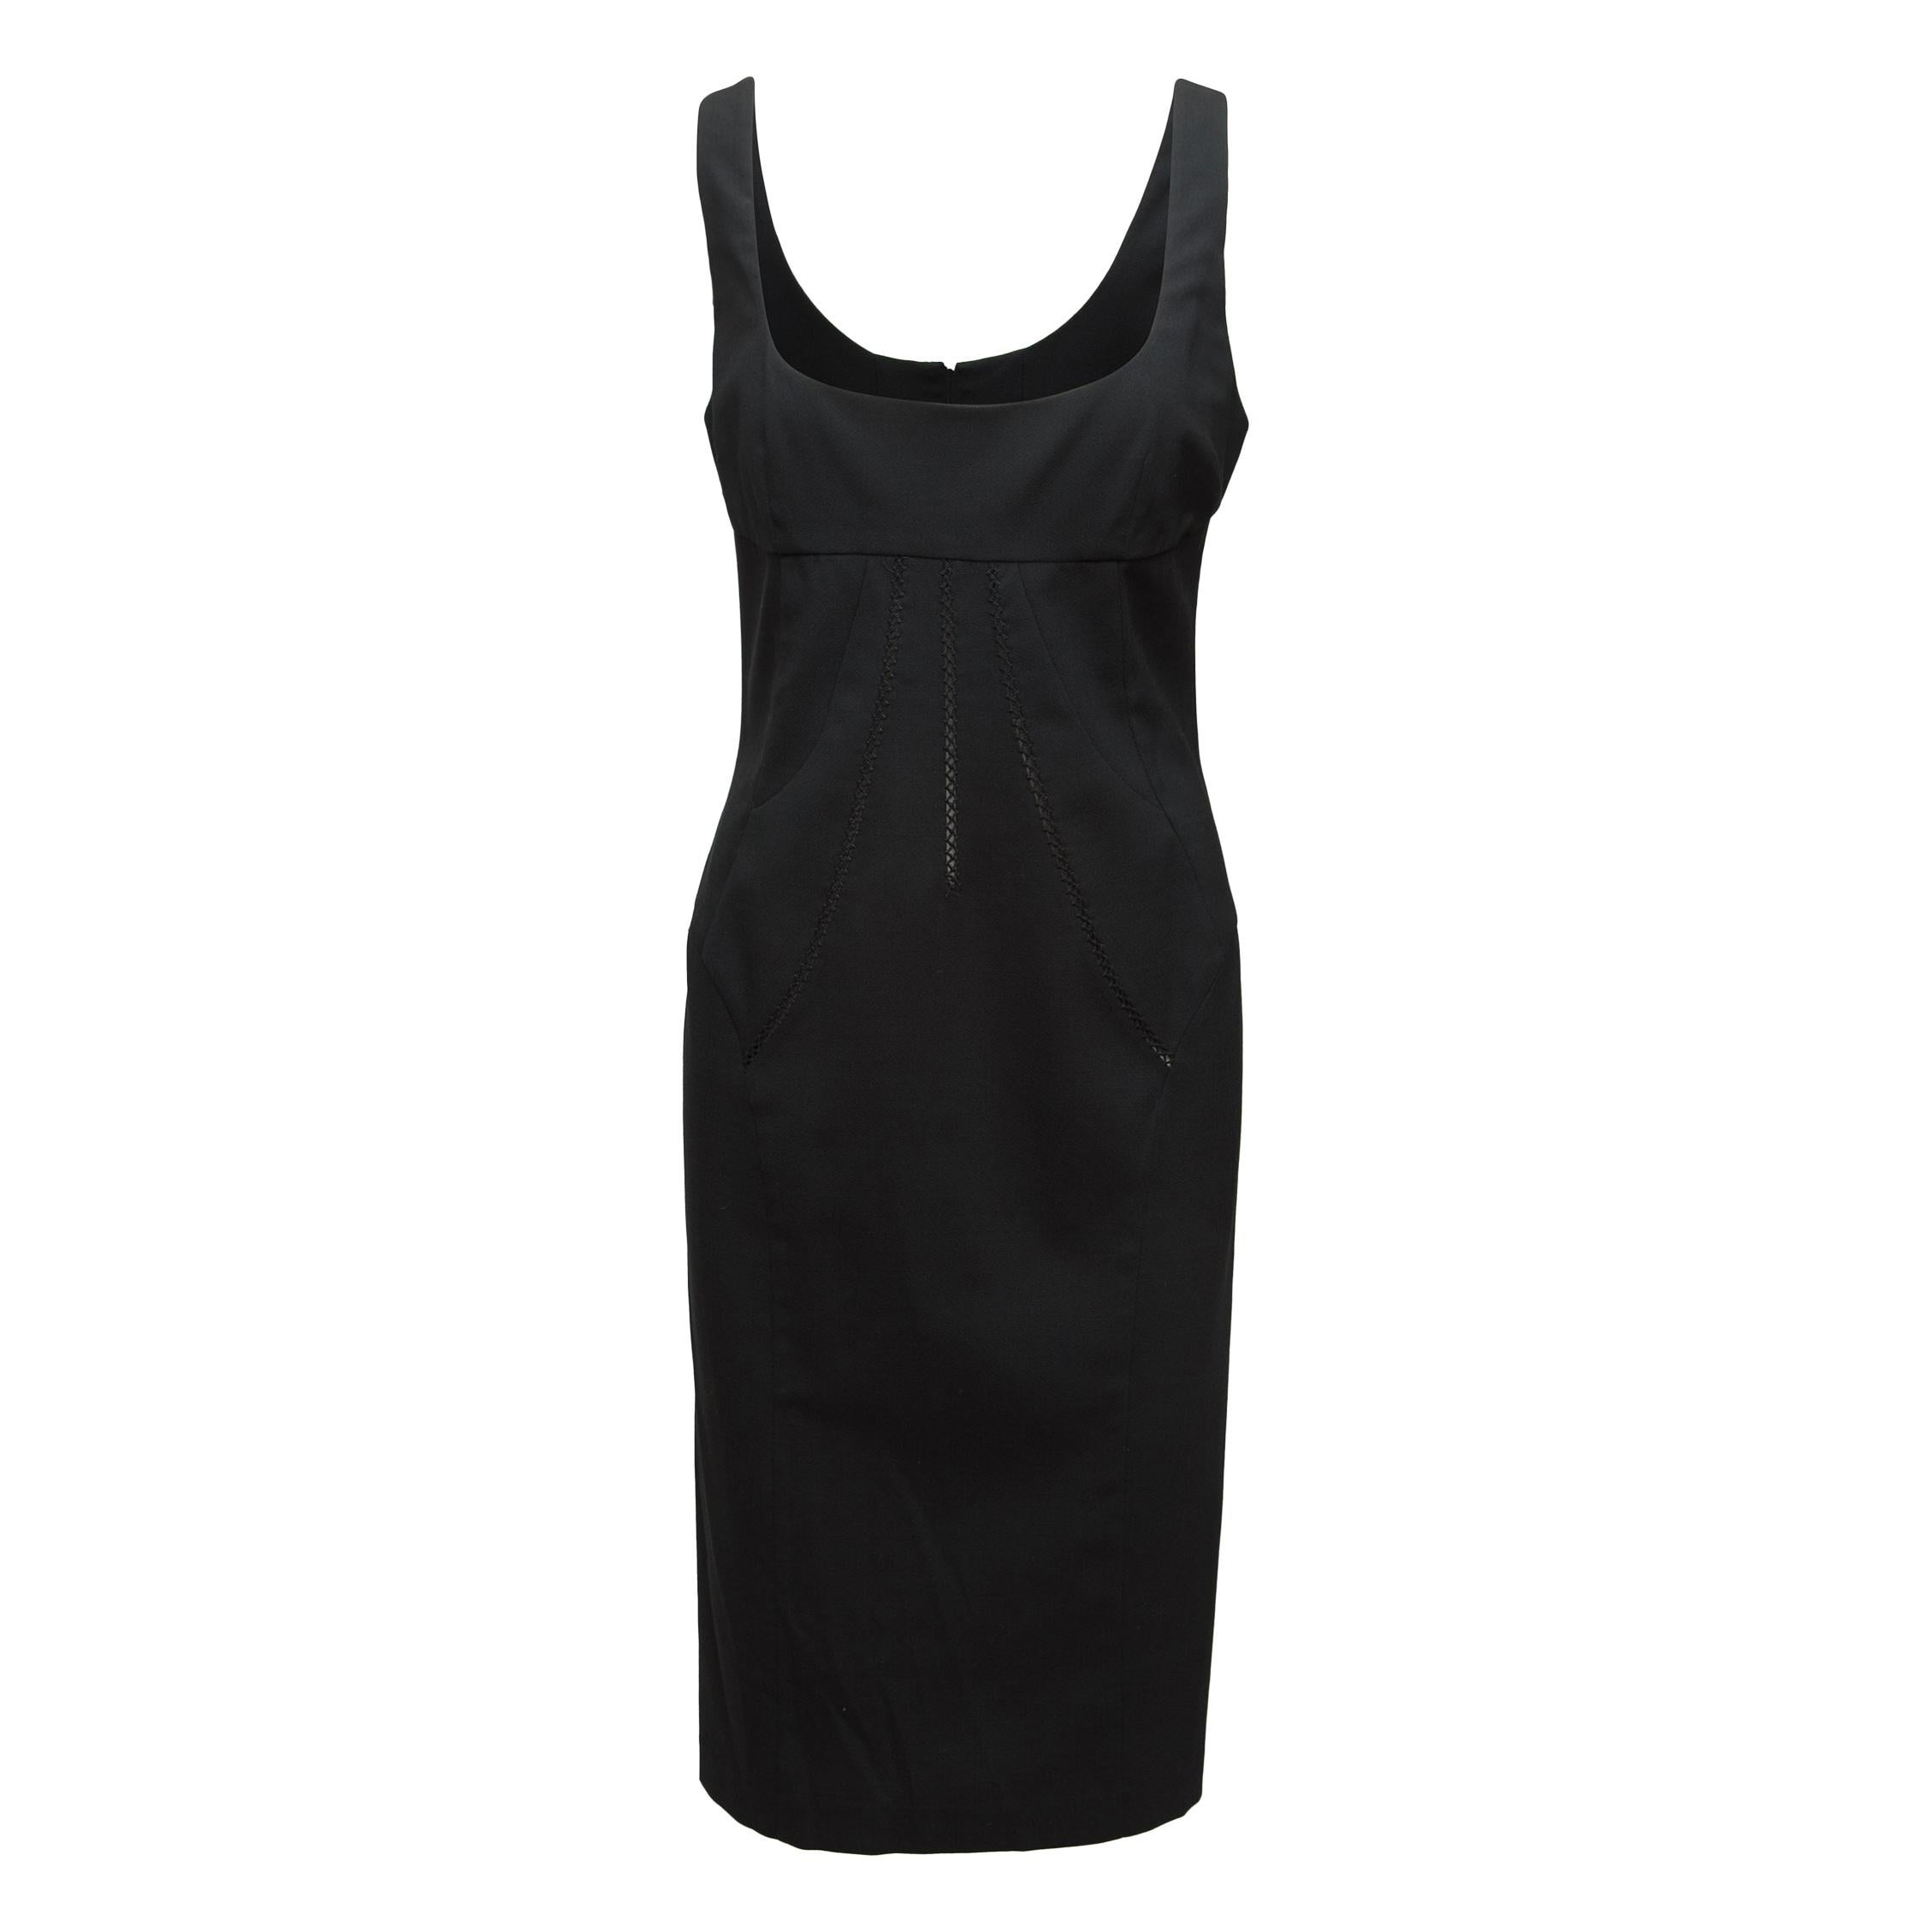 Black D&G Sleeveless Fitted Dress